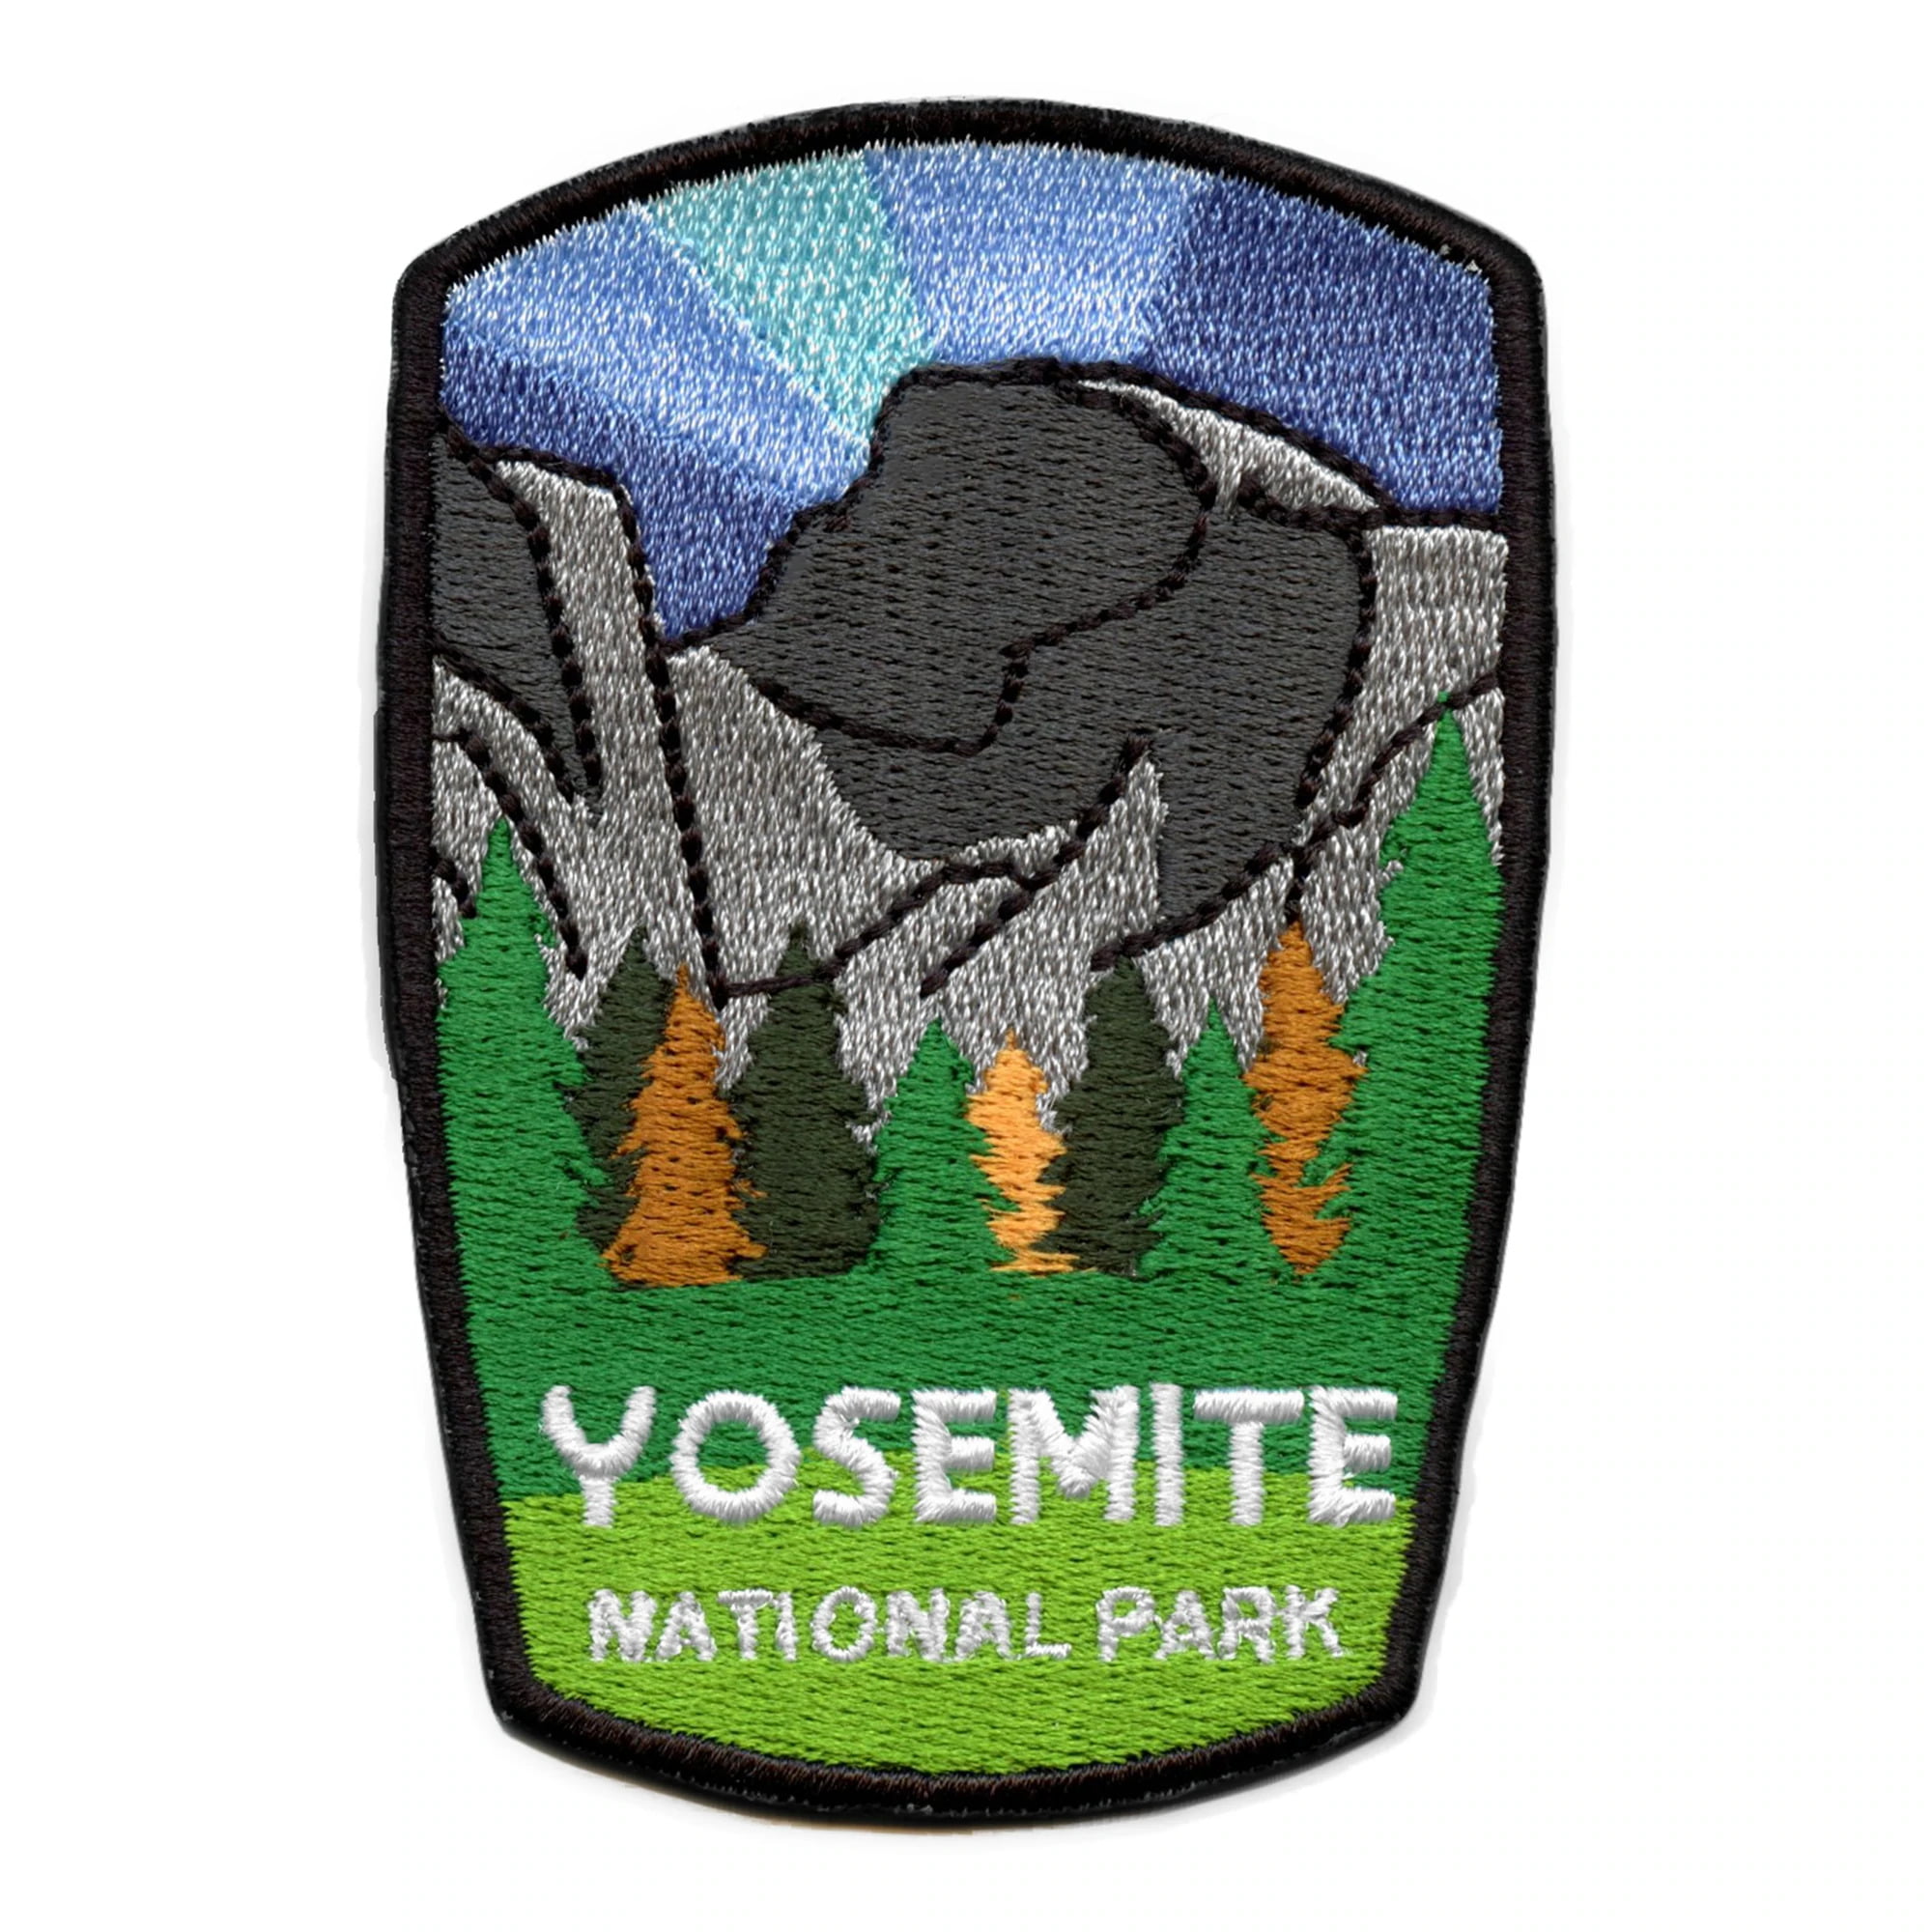 Yosemite National Park Embroidered Patch hook Badge Emblem Nature Gift Applique 